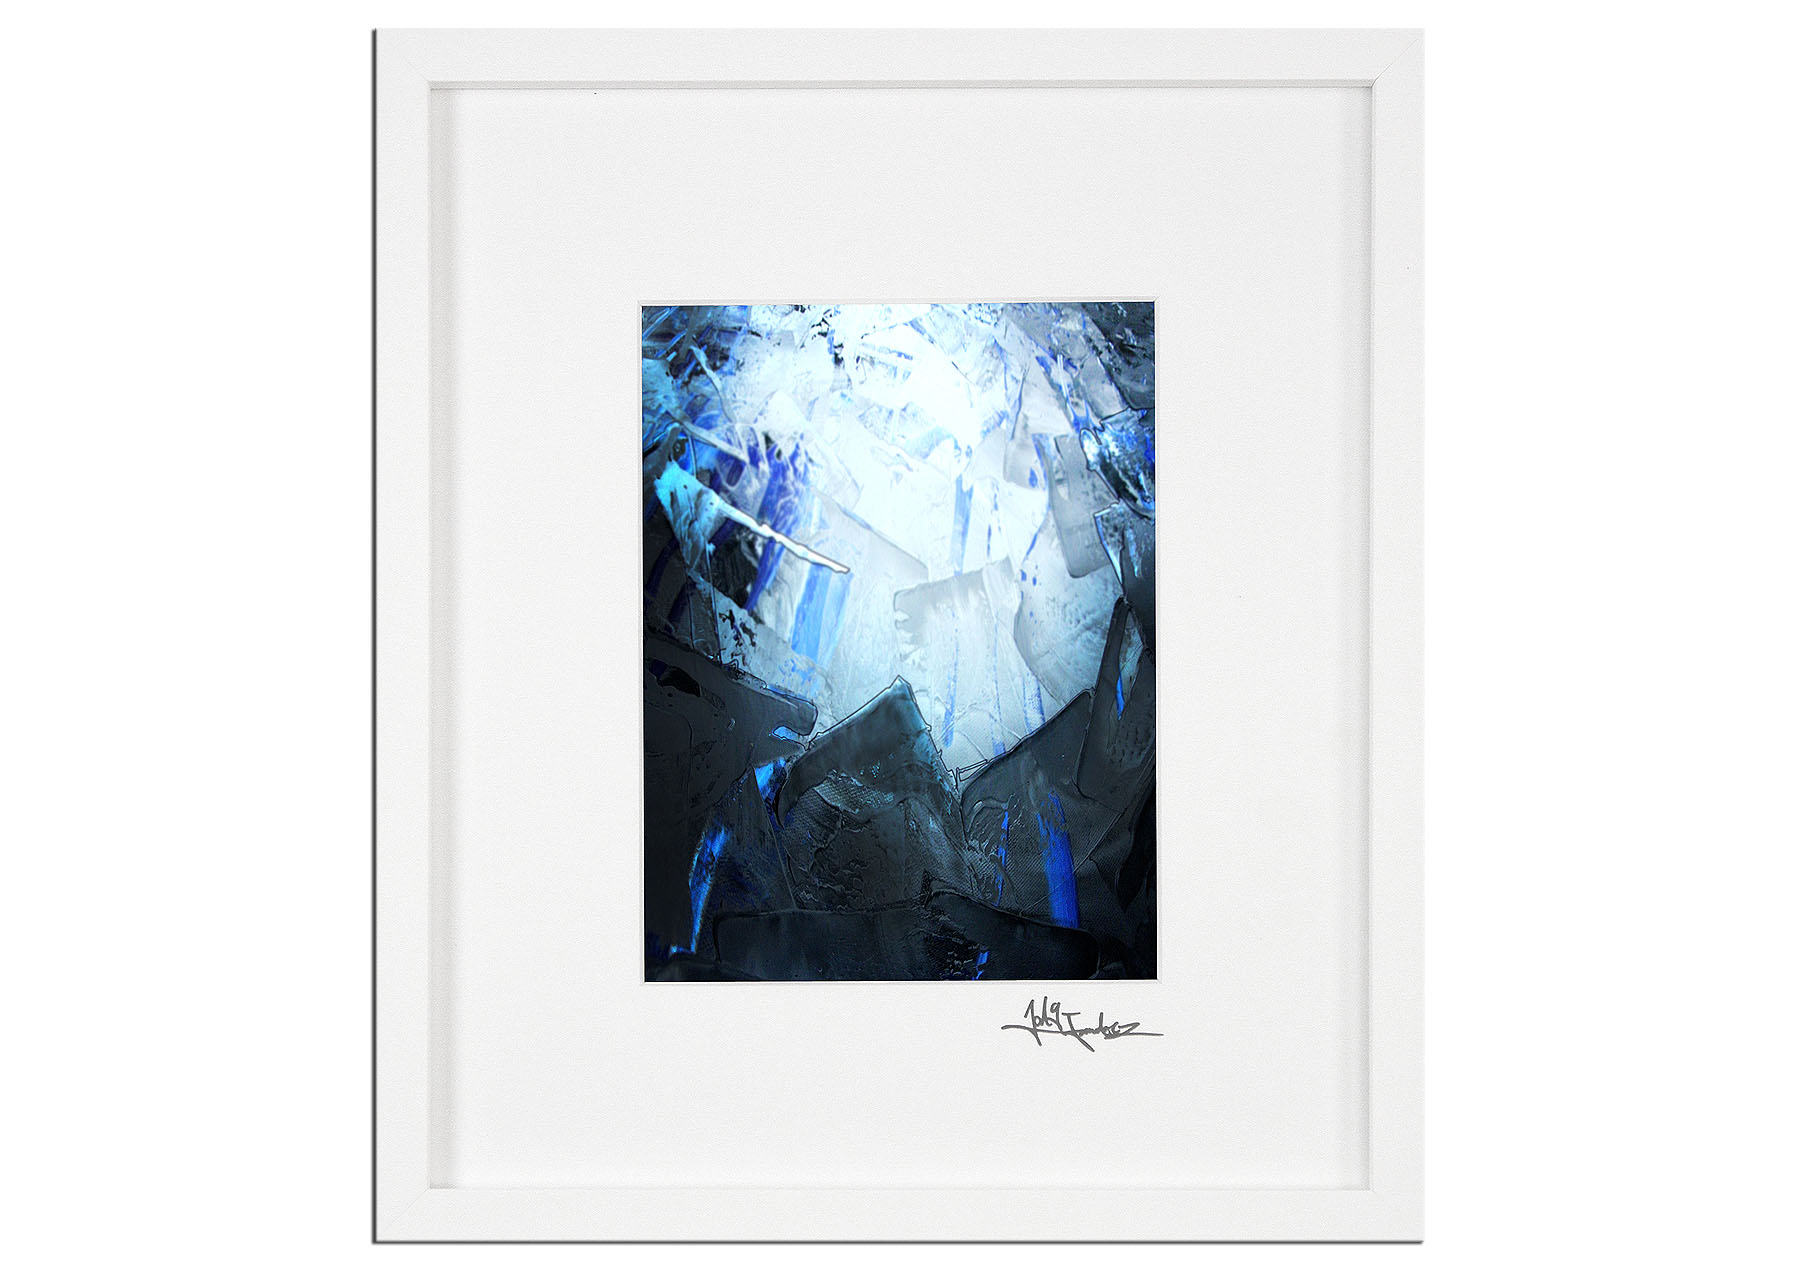 Edition, signierter Kunstdruck, Julio Fernandez: "Cave of Mirrors: The Dome"